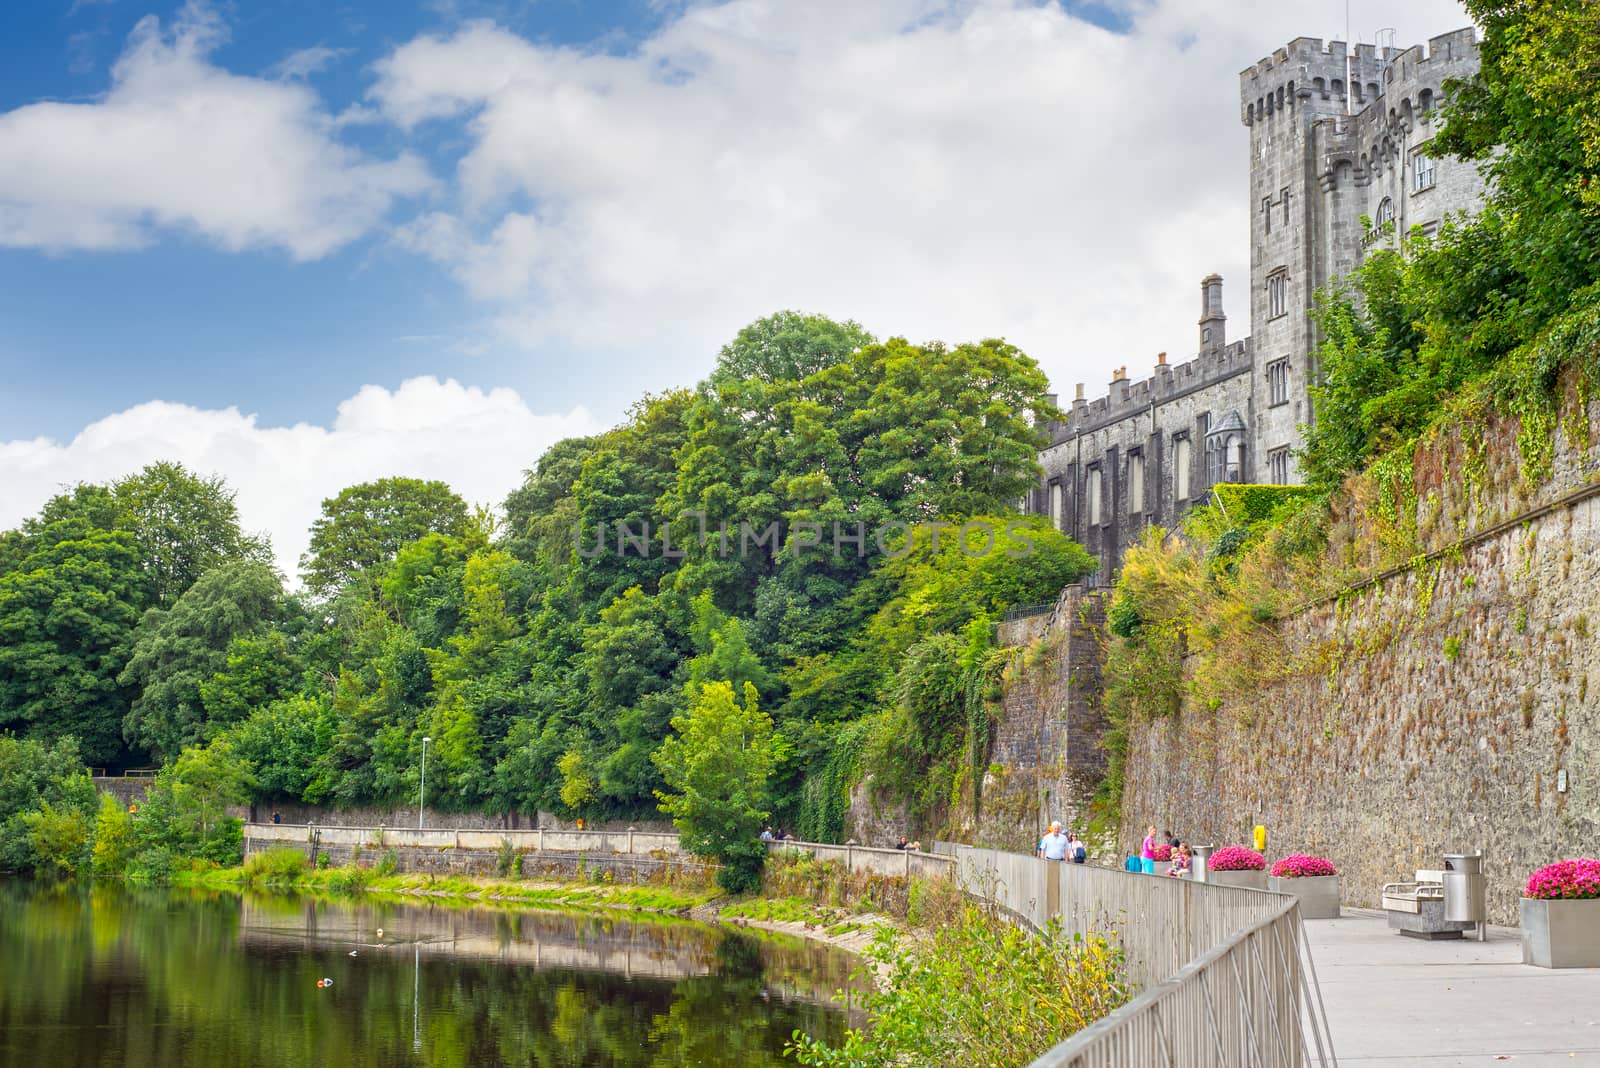 riverside walk next to the kilkenny castle by morrbyte